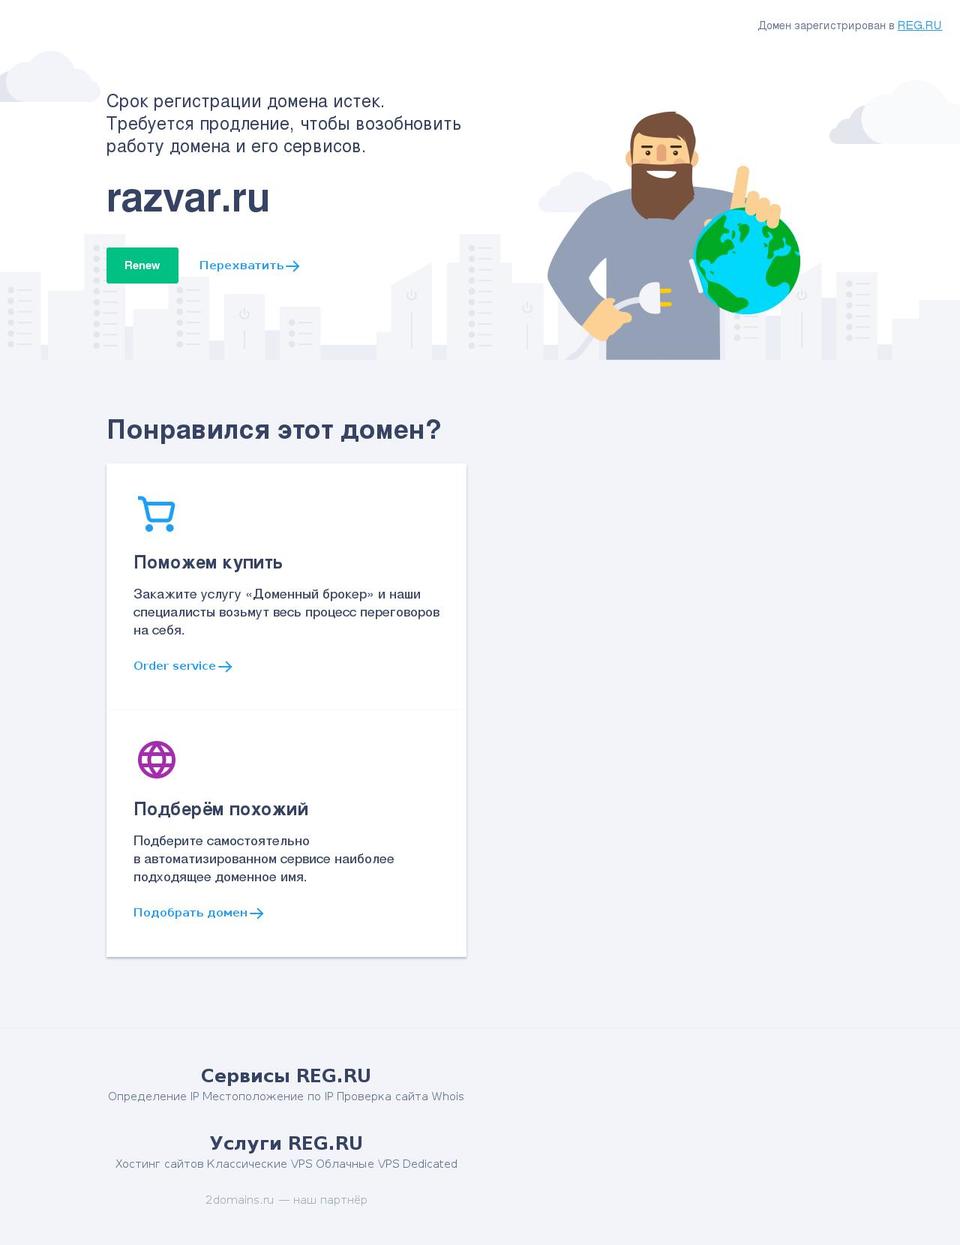 razvar.ru shopify website screenshot